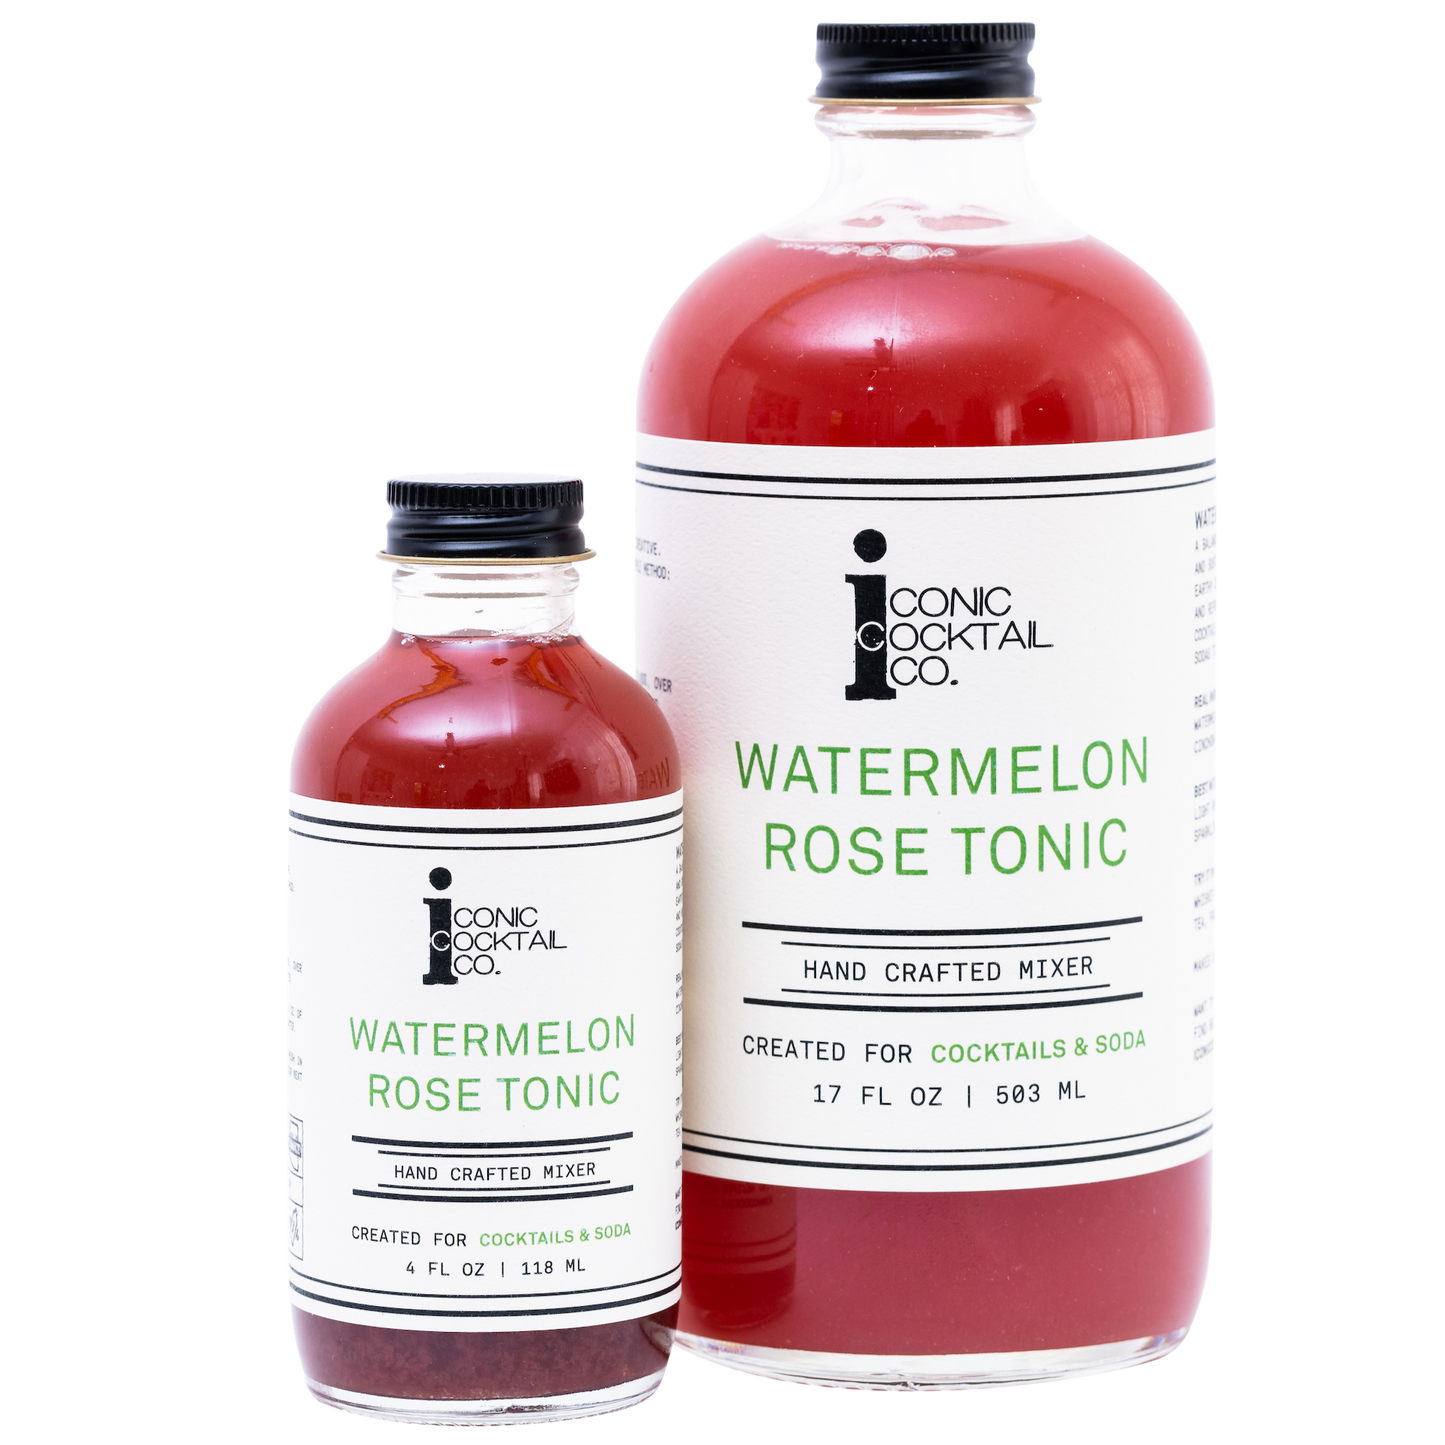 Watermelon Rose Tonic